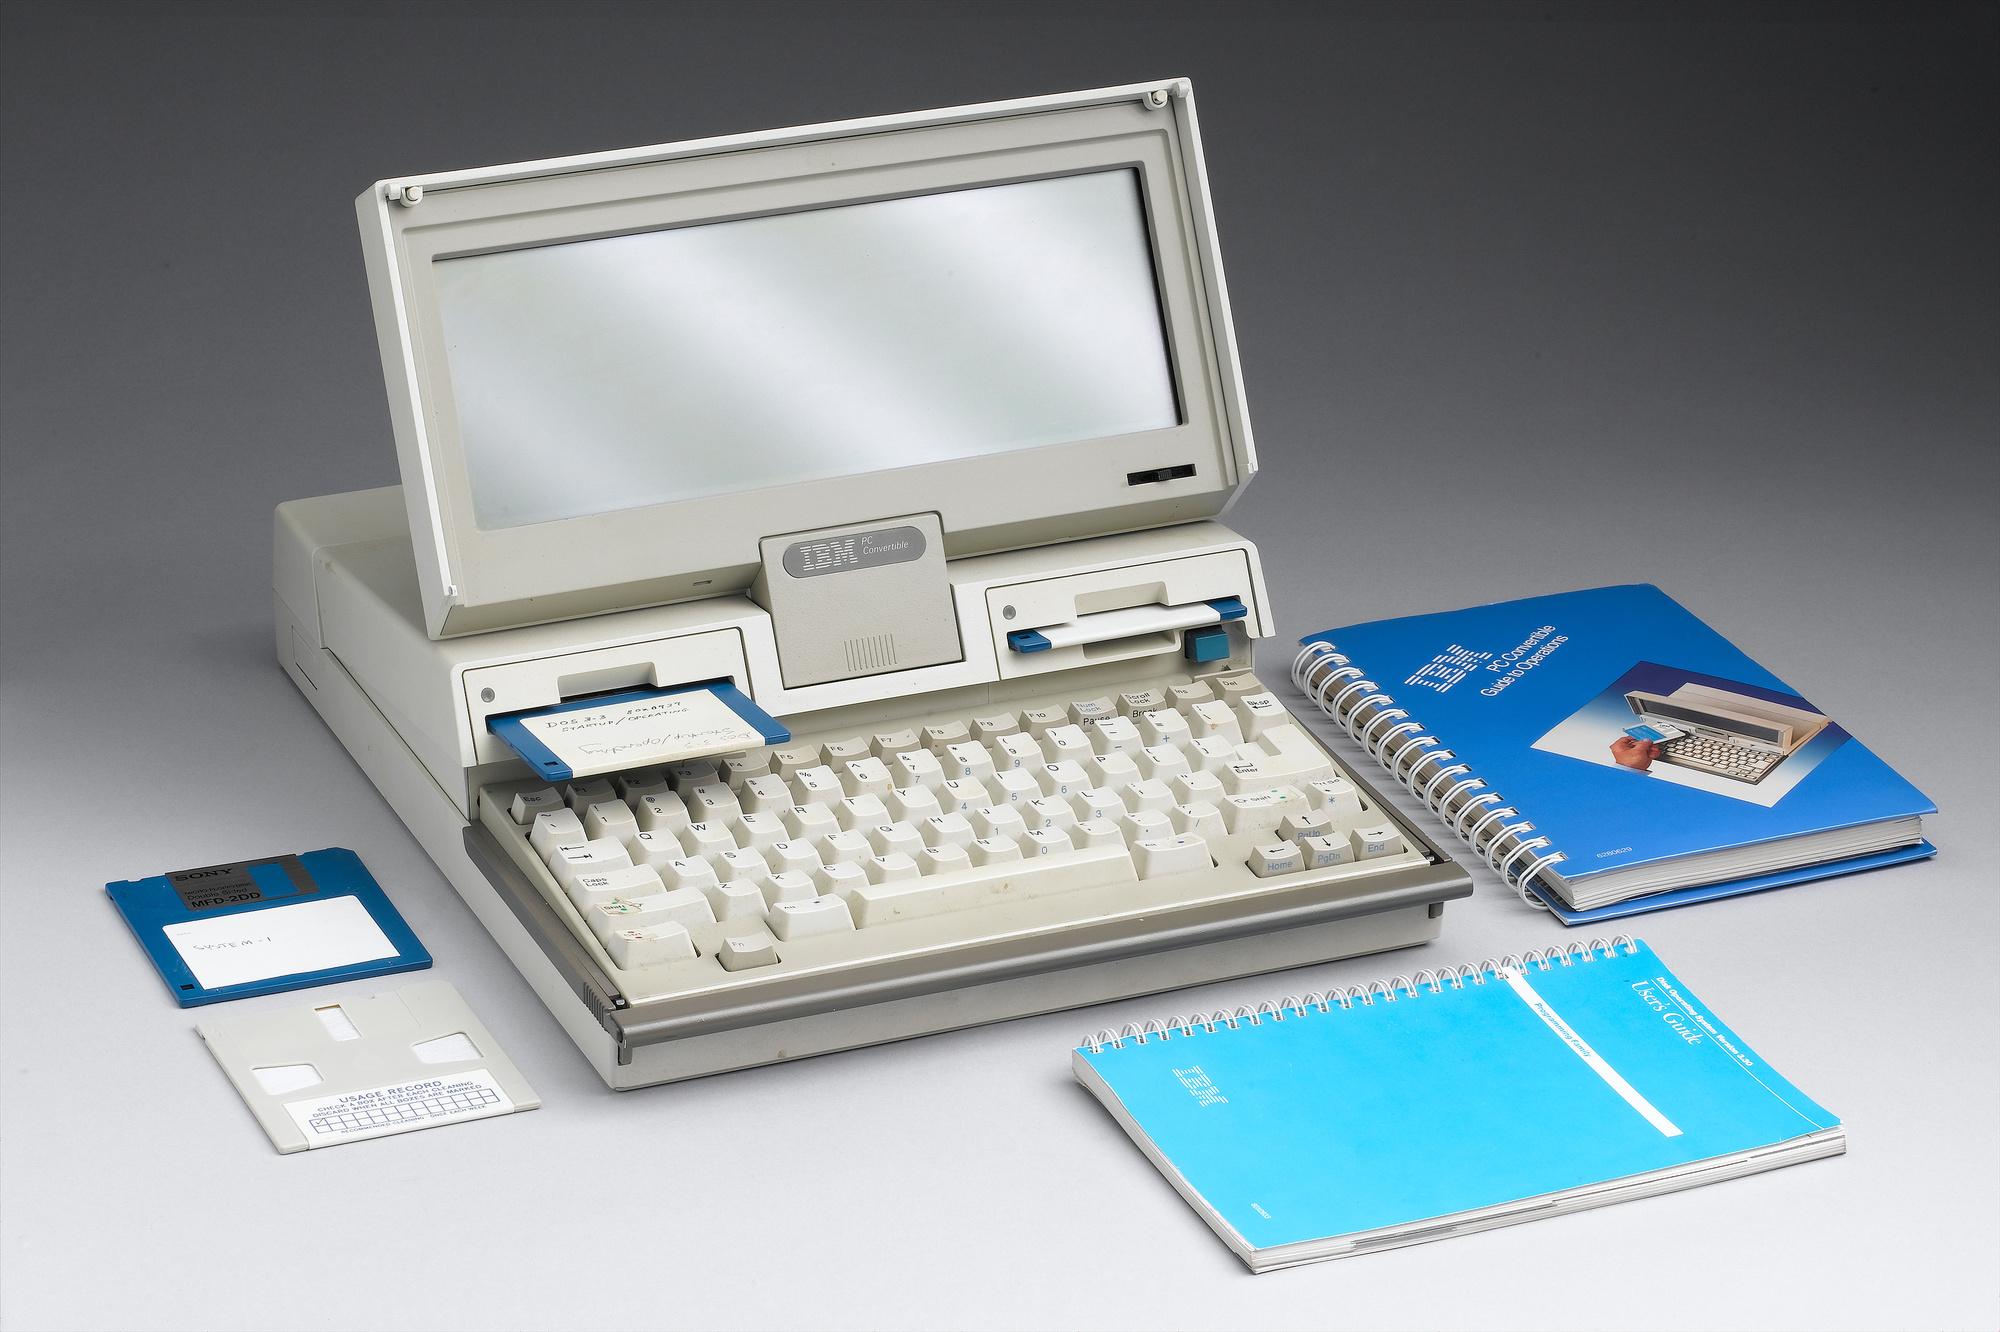 IBM Laptop model 5140 (1987-1988)